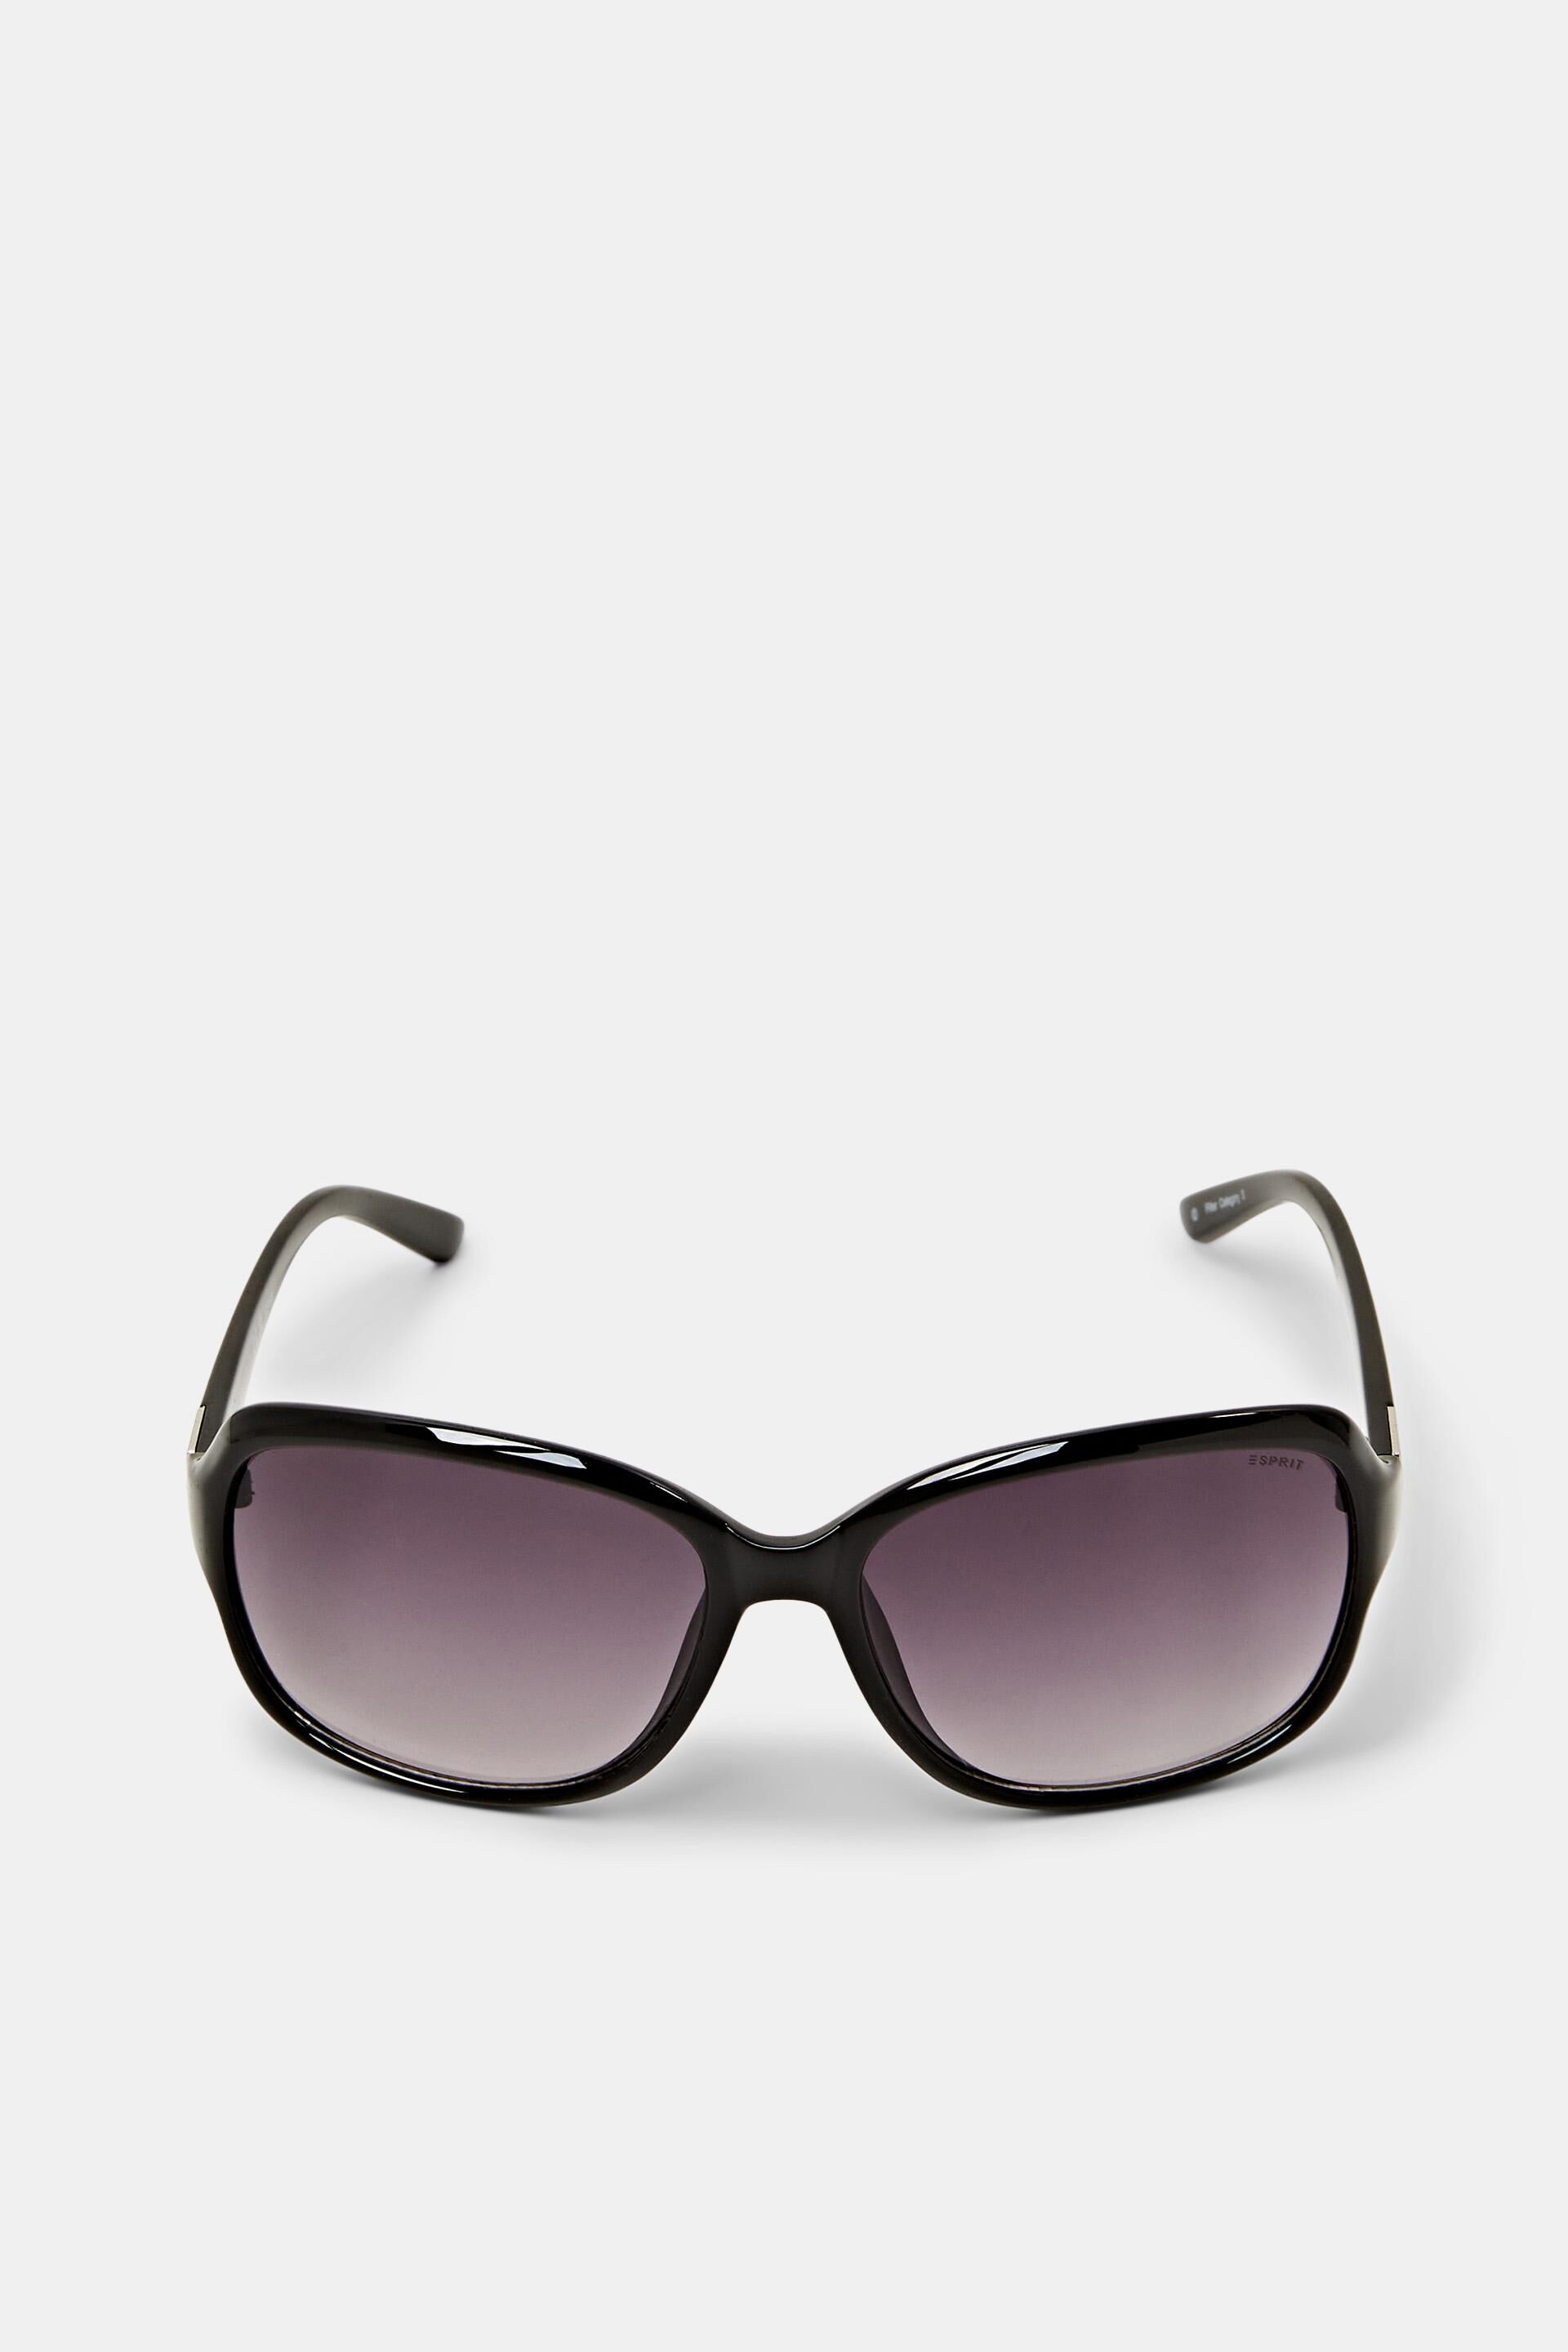 Esprit Sunglasses with design a timeless